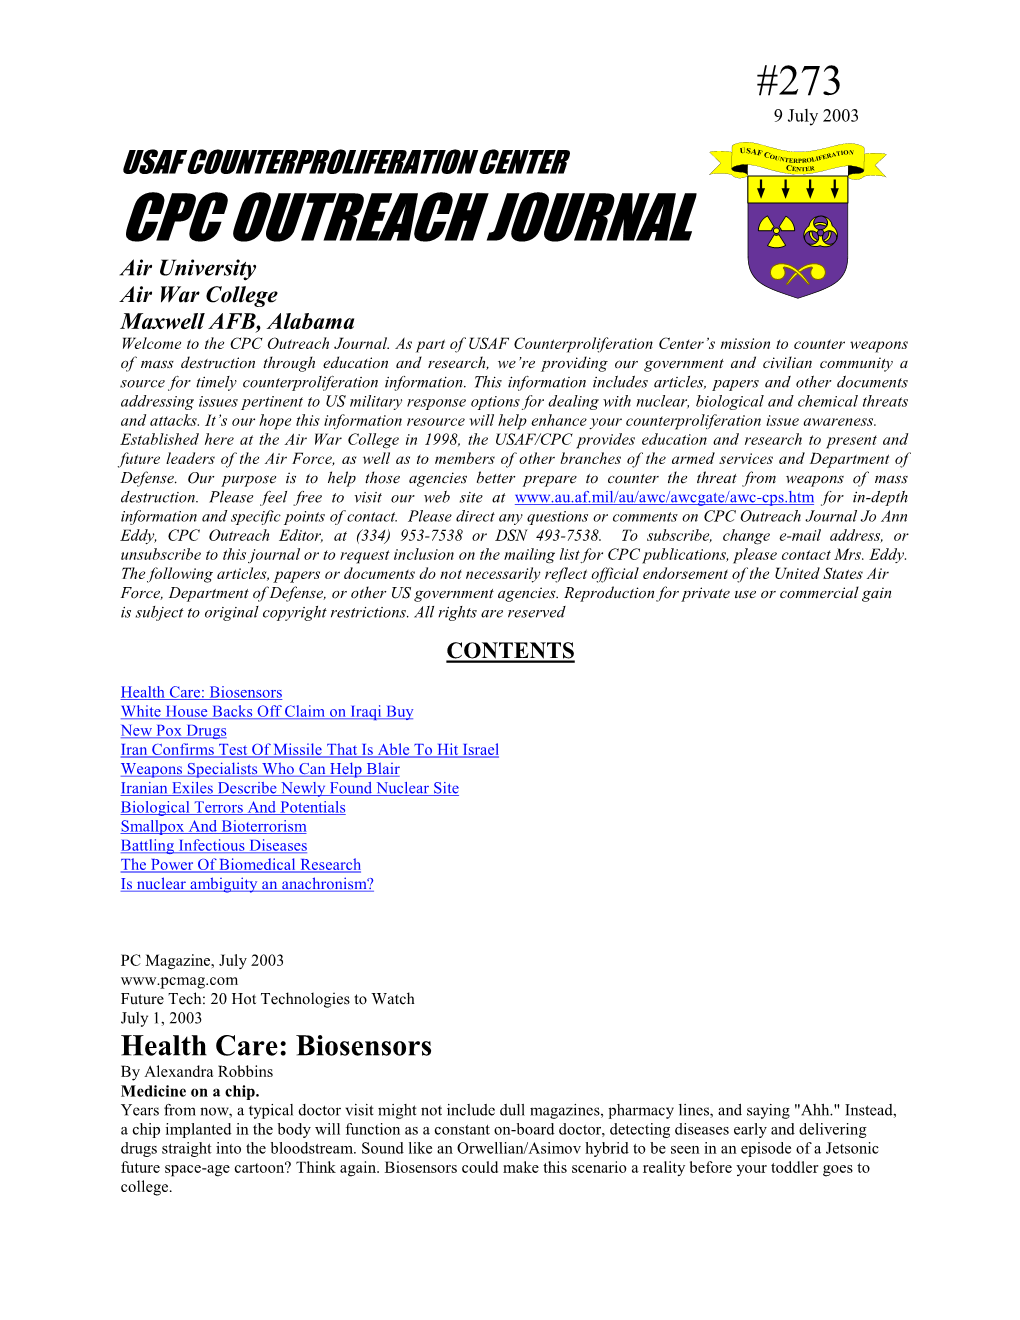 CPC Outreach Journal #273